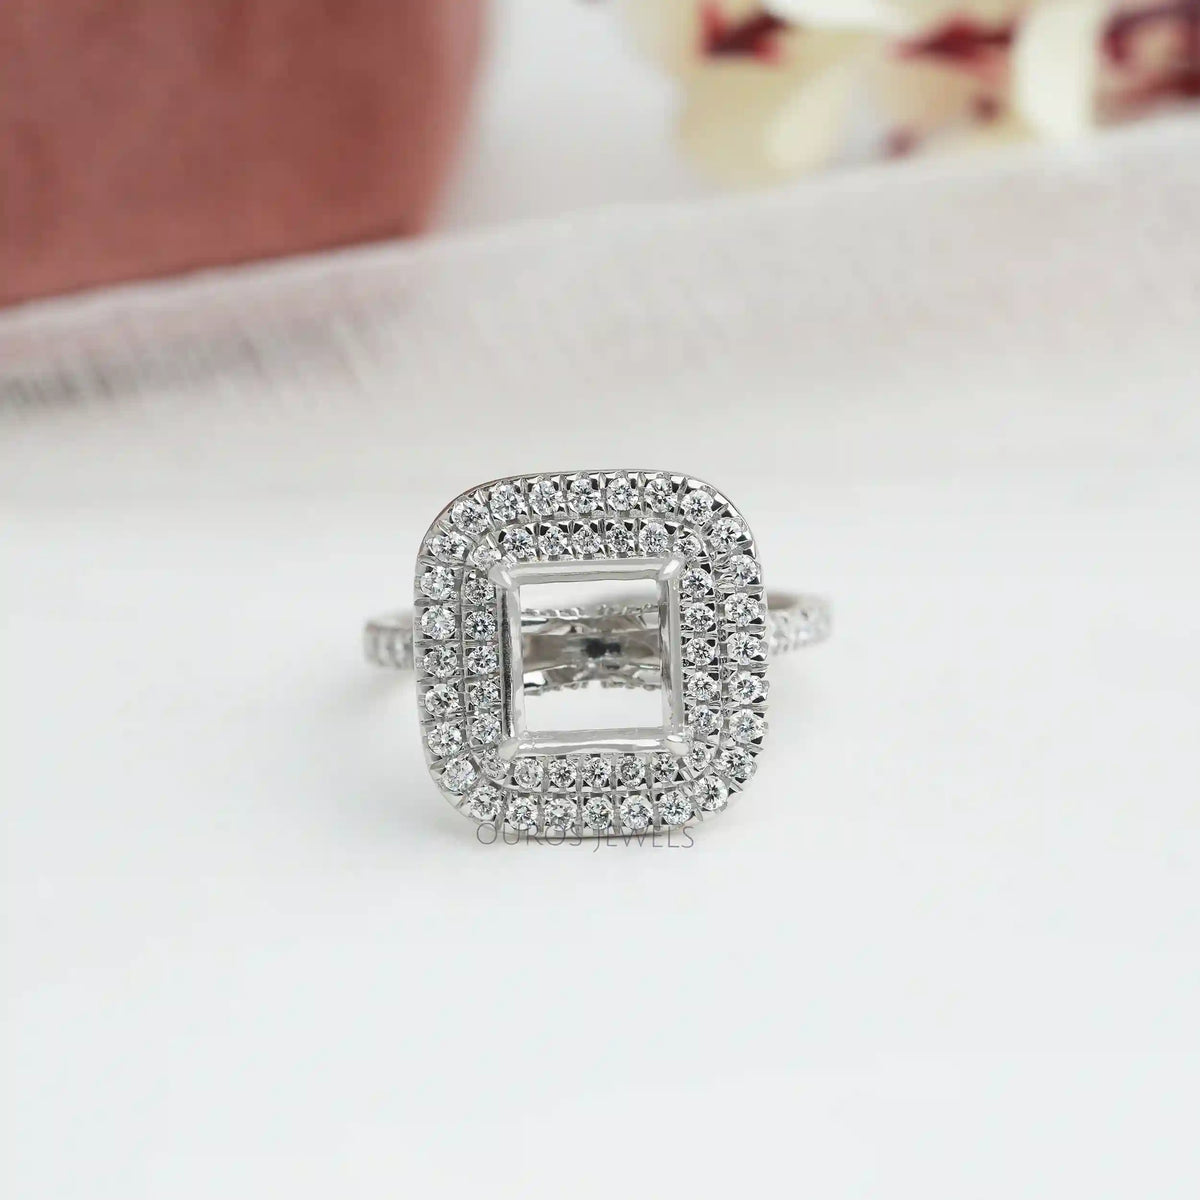 Love my ring!!! Neil lane double halo | Neil lane engagement rings, Wedding rings  engagement, Engagement ring buying guide